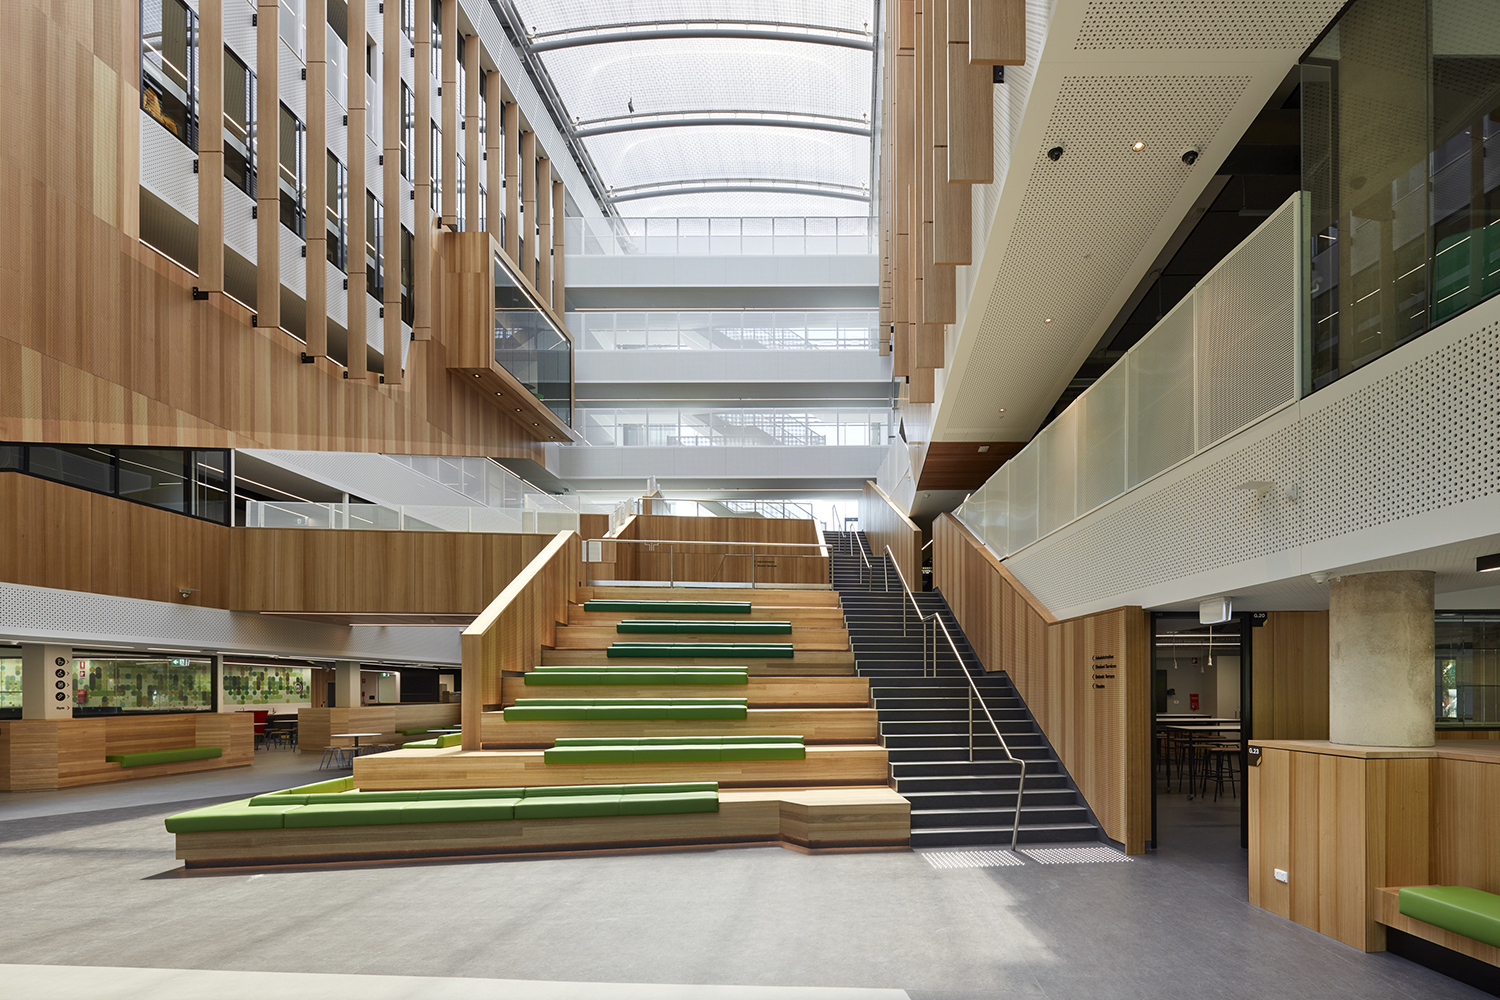 17 Interior Design Schools Worth Applying To | Architectural Digest